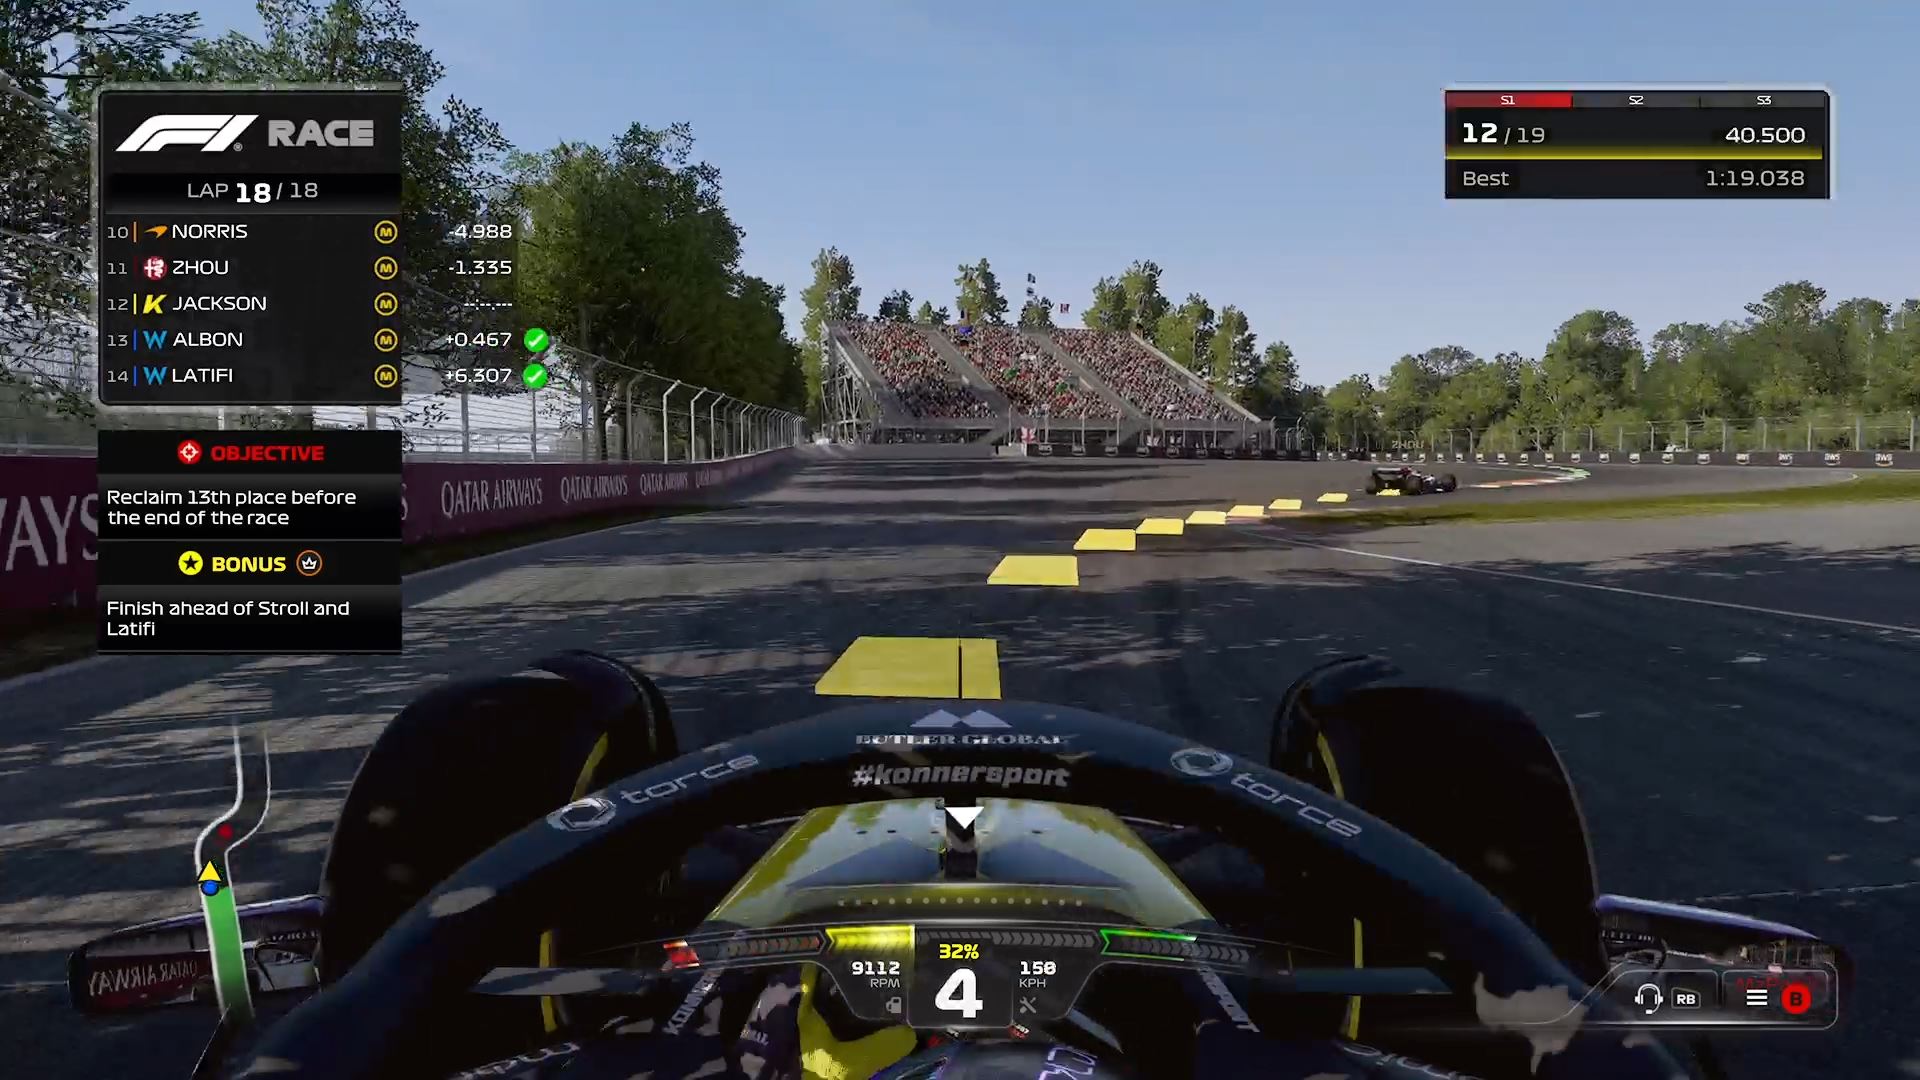 Race game HUD. Head-up display (игры). F1 2020 режимы игры. F1 2020 Camera settings. F1 23 игра